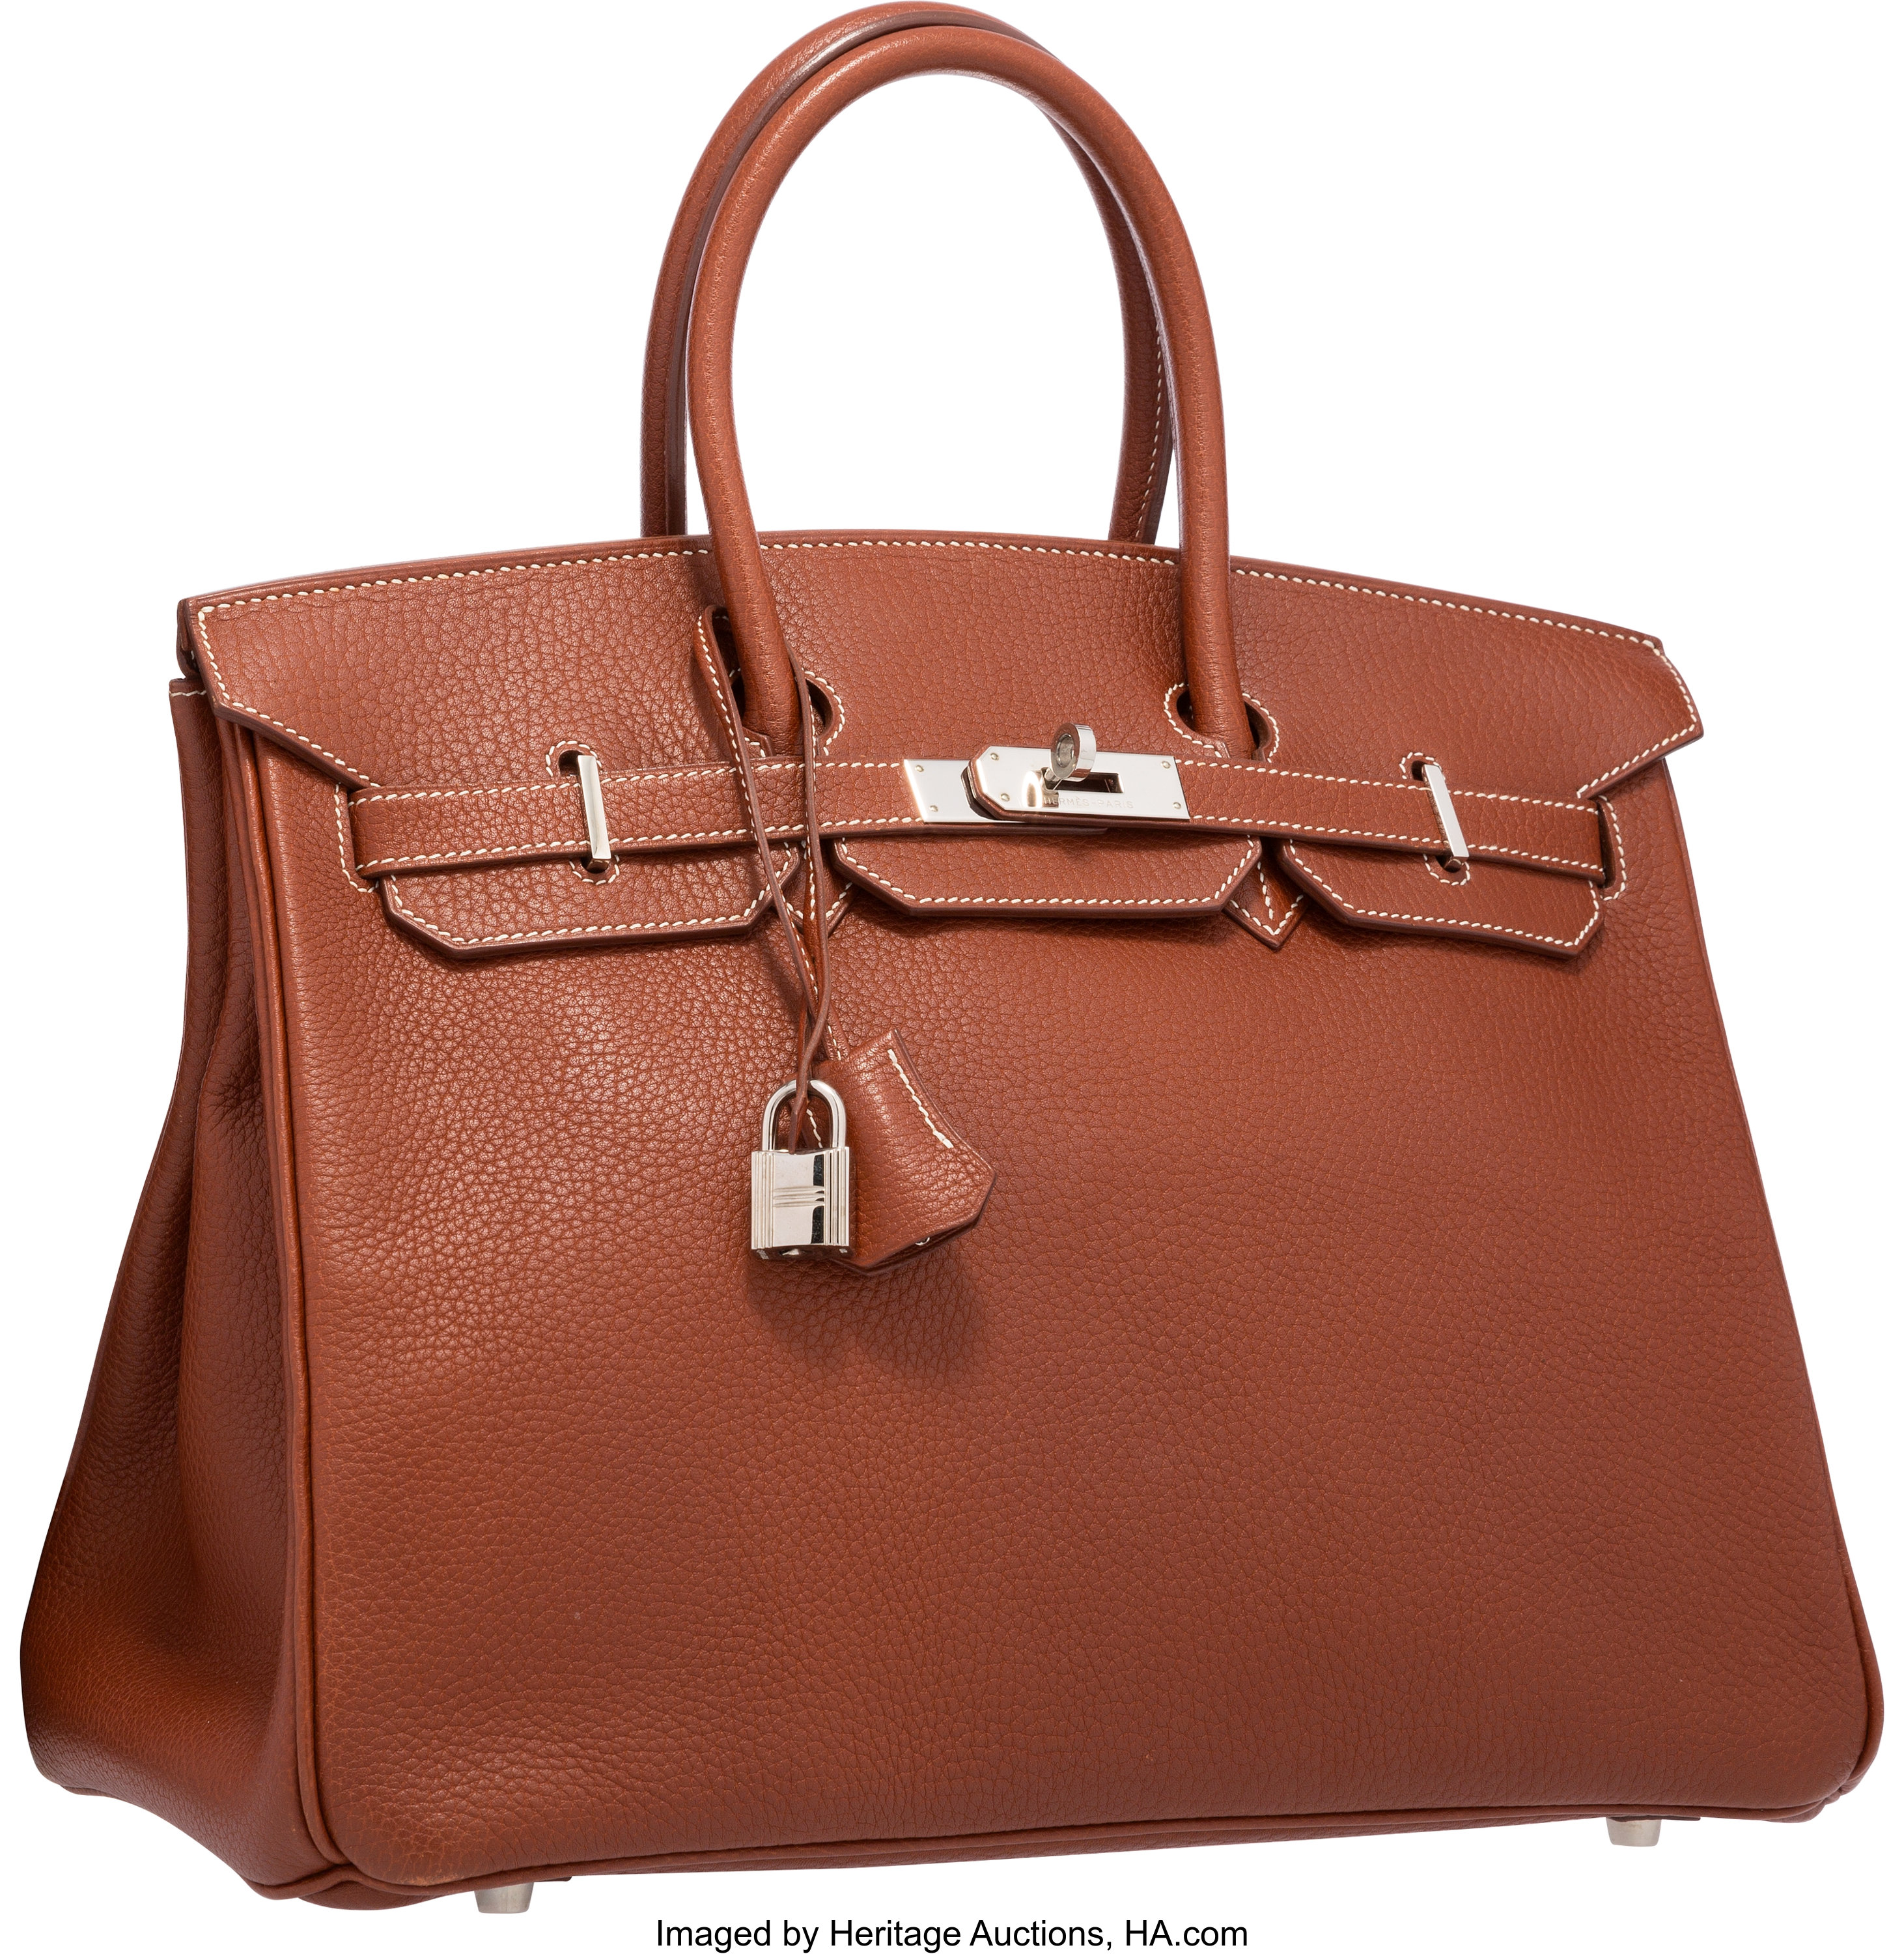 Hermes Limited Edition 35cm Tri-Color Birkin Bag with Palladium